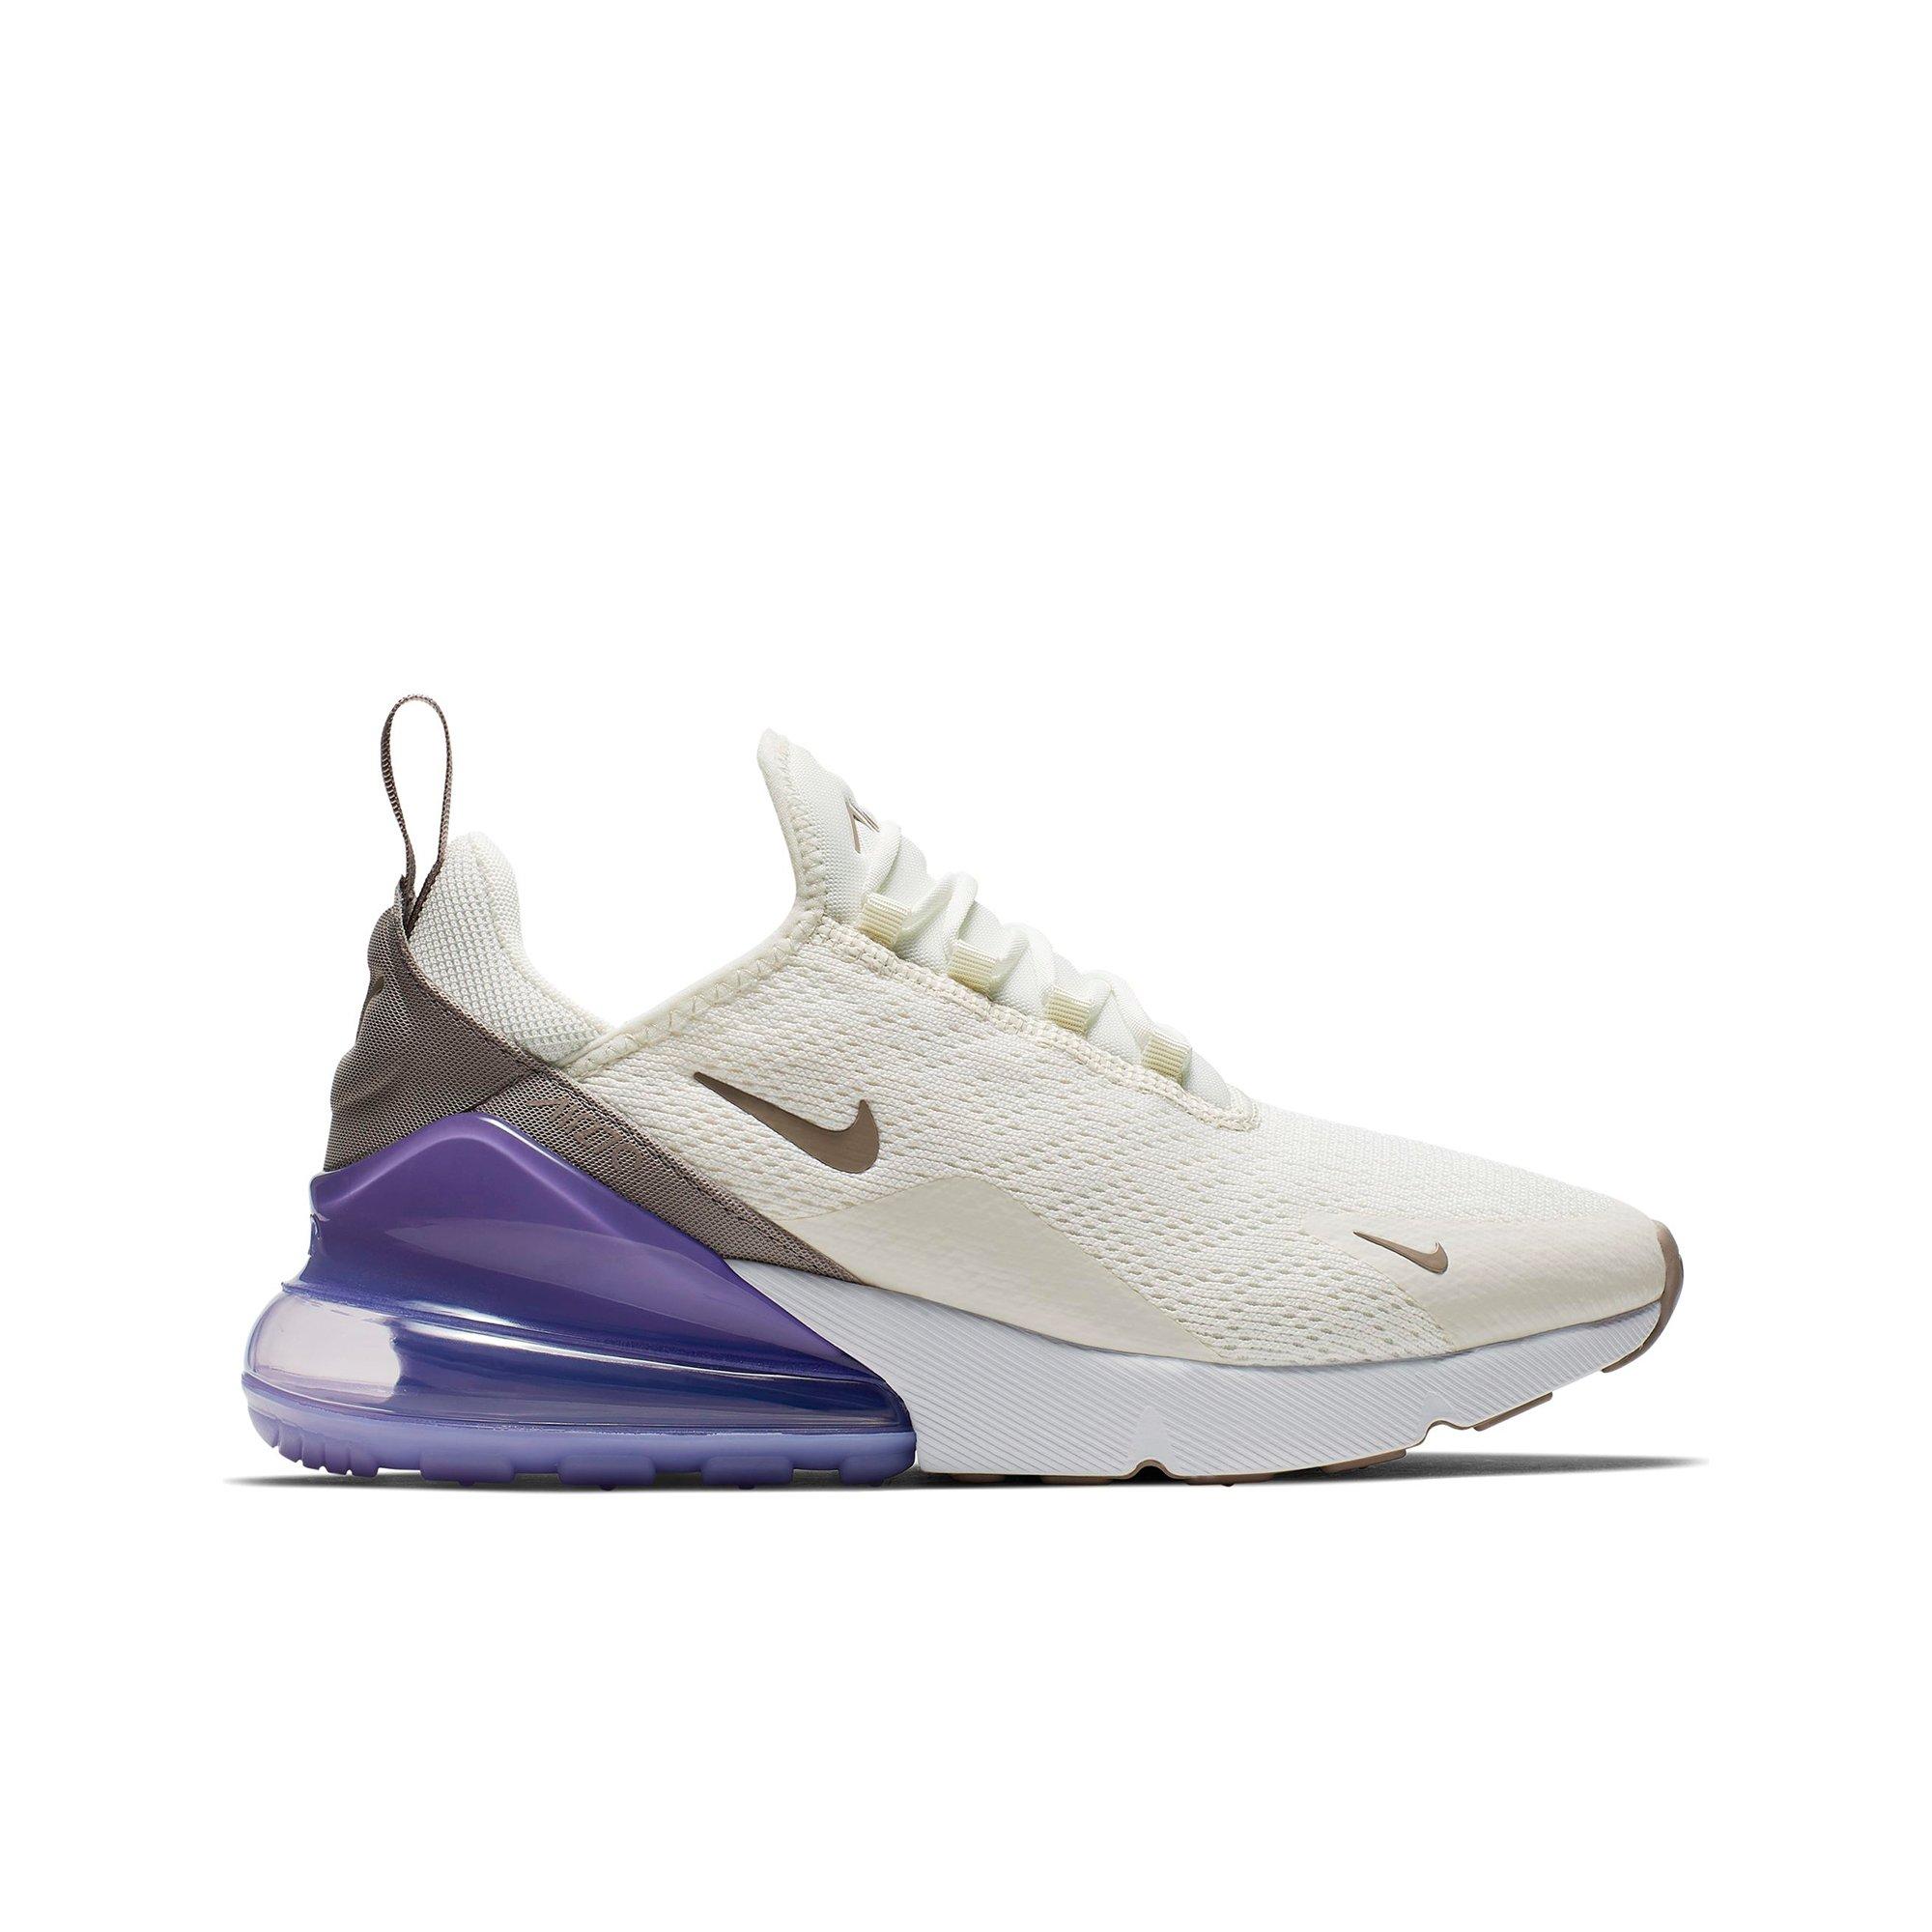 white and purple air max 270